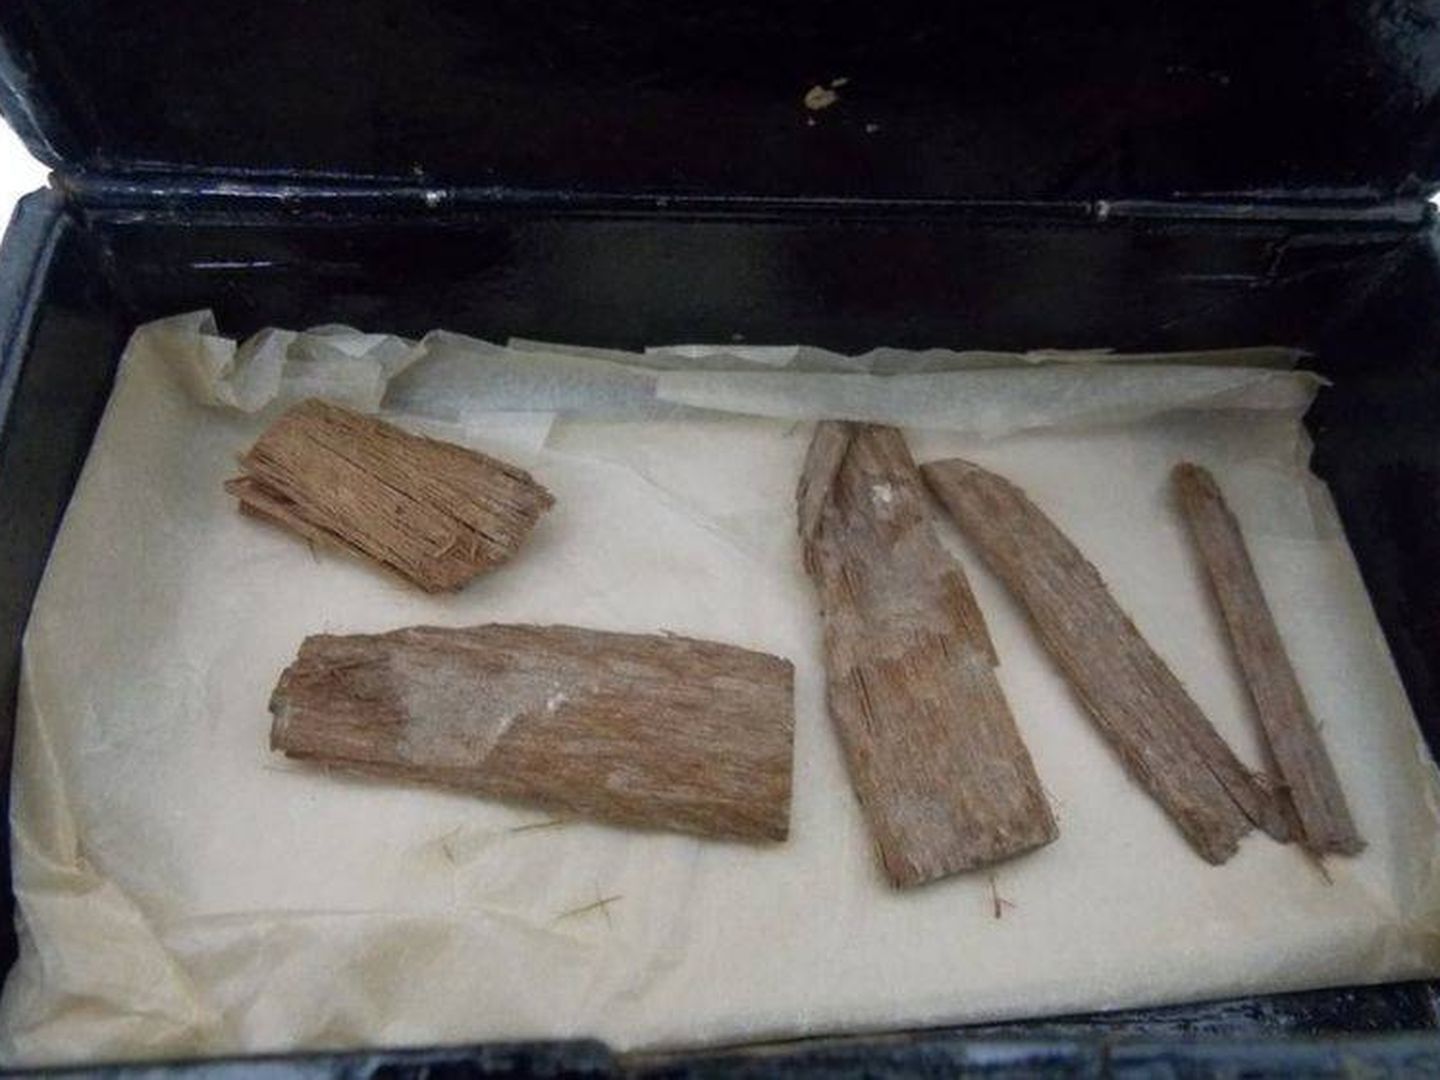 La reliquia fue encontrada en una cajetilla de cigarrillos. (Universidad de Aberdeen)